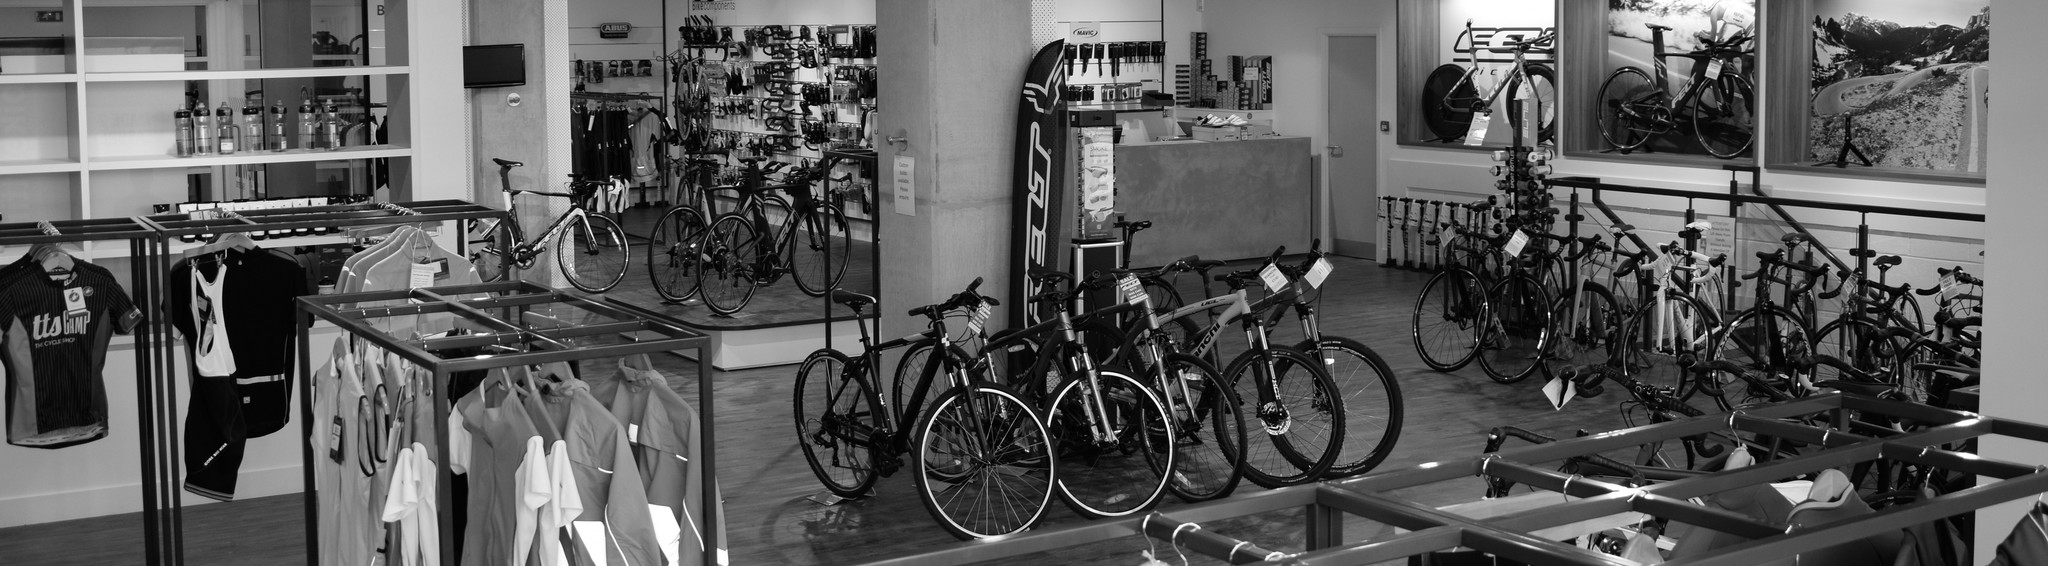 Bike shop bristol